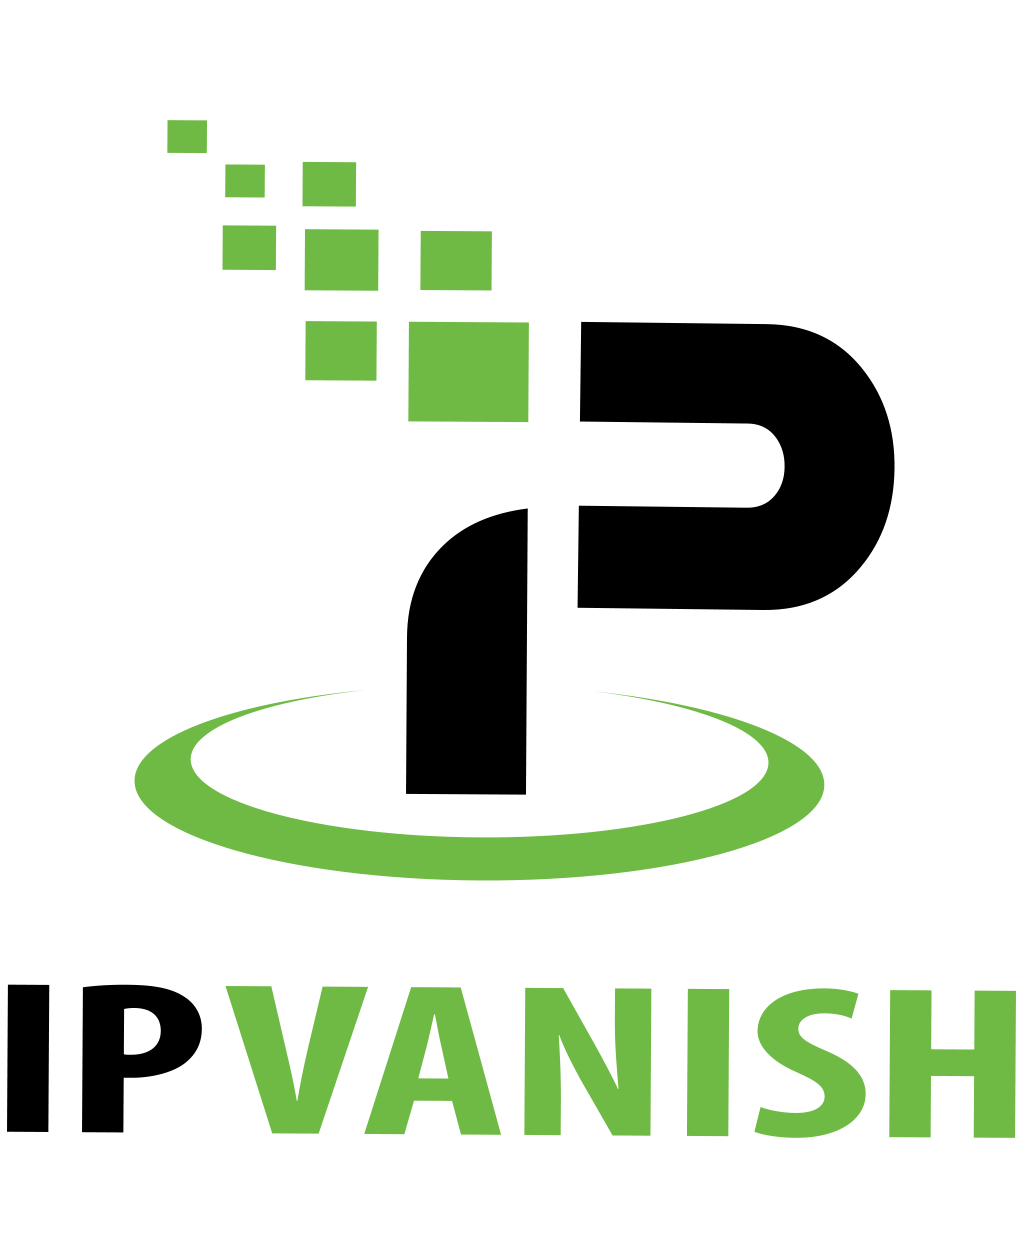 IPVanish Overview